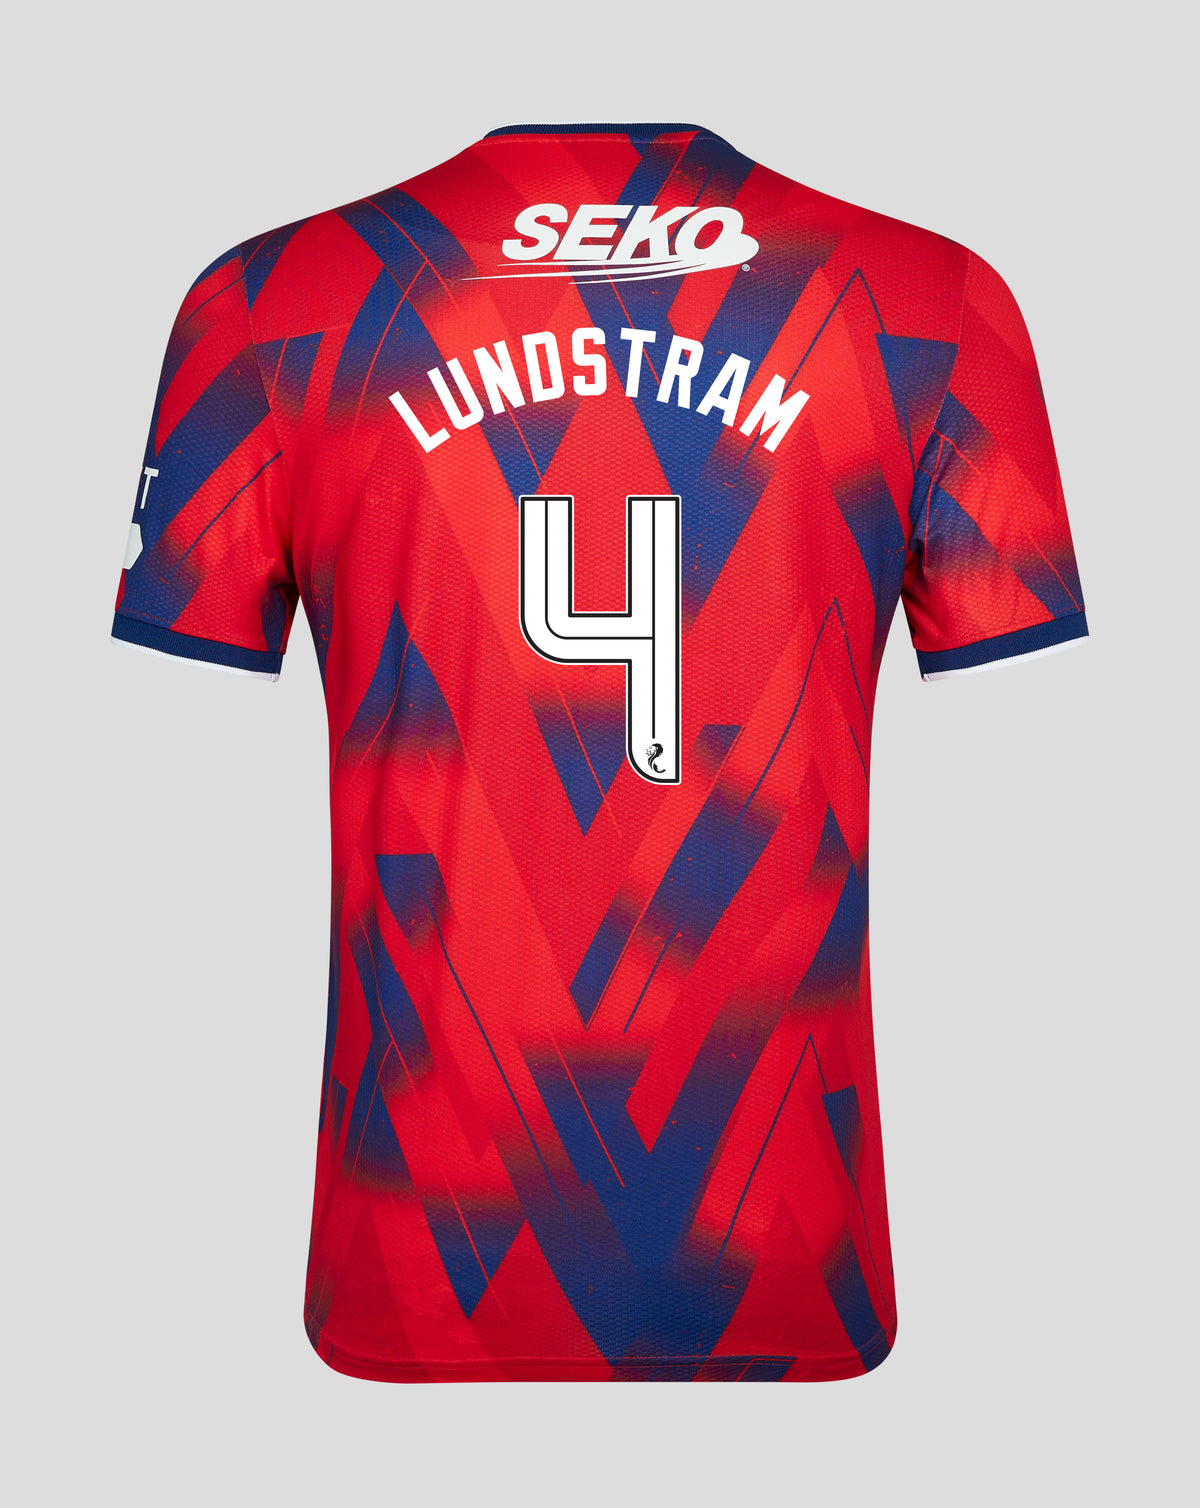 Lundstram - Fourth Kit